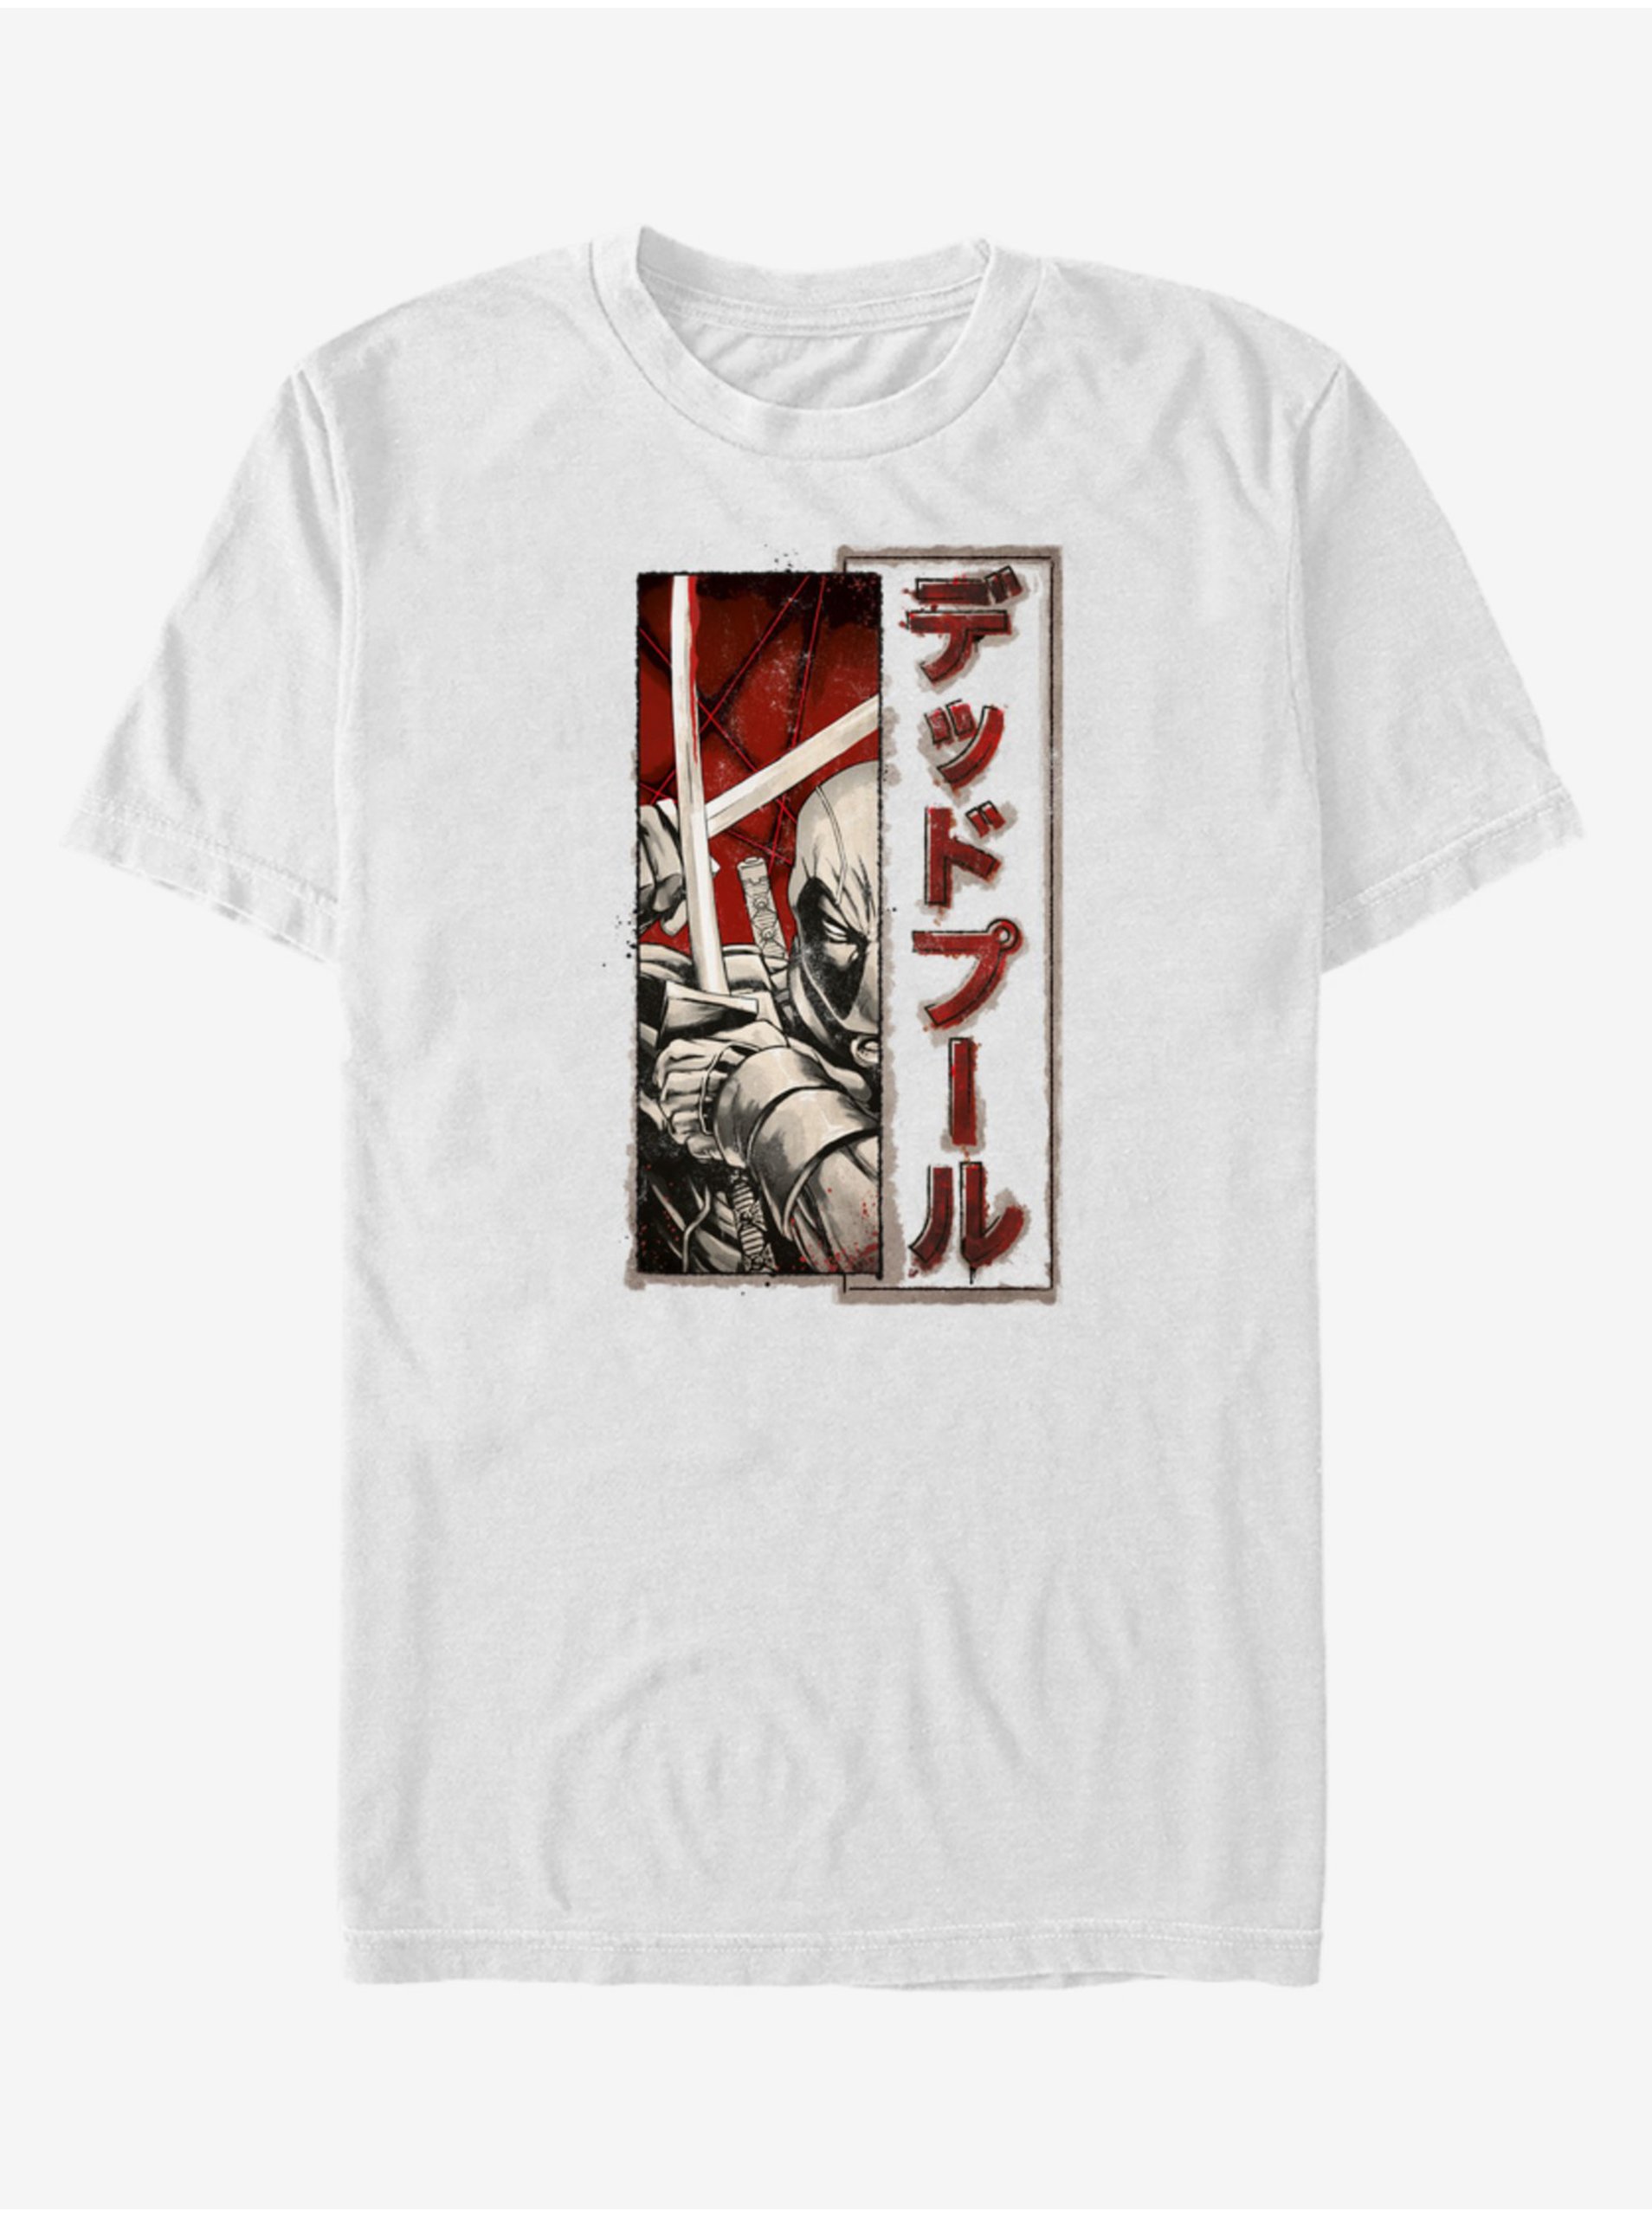 Lacno Bílé unisex tričko ZOOT.Fan Marvel Deadpool Sword Kanji